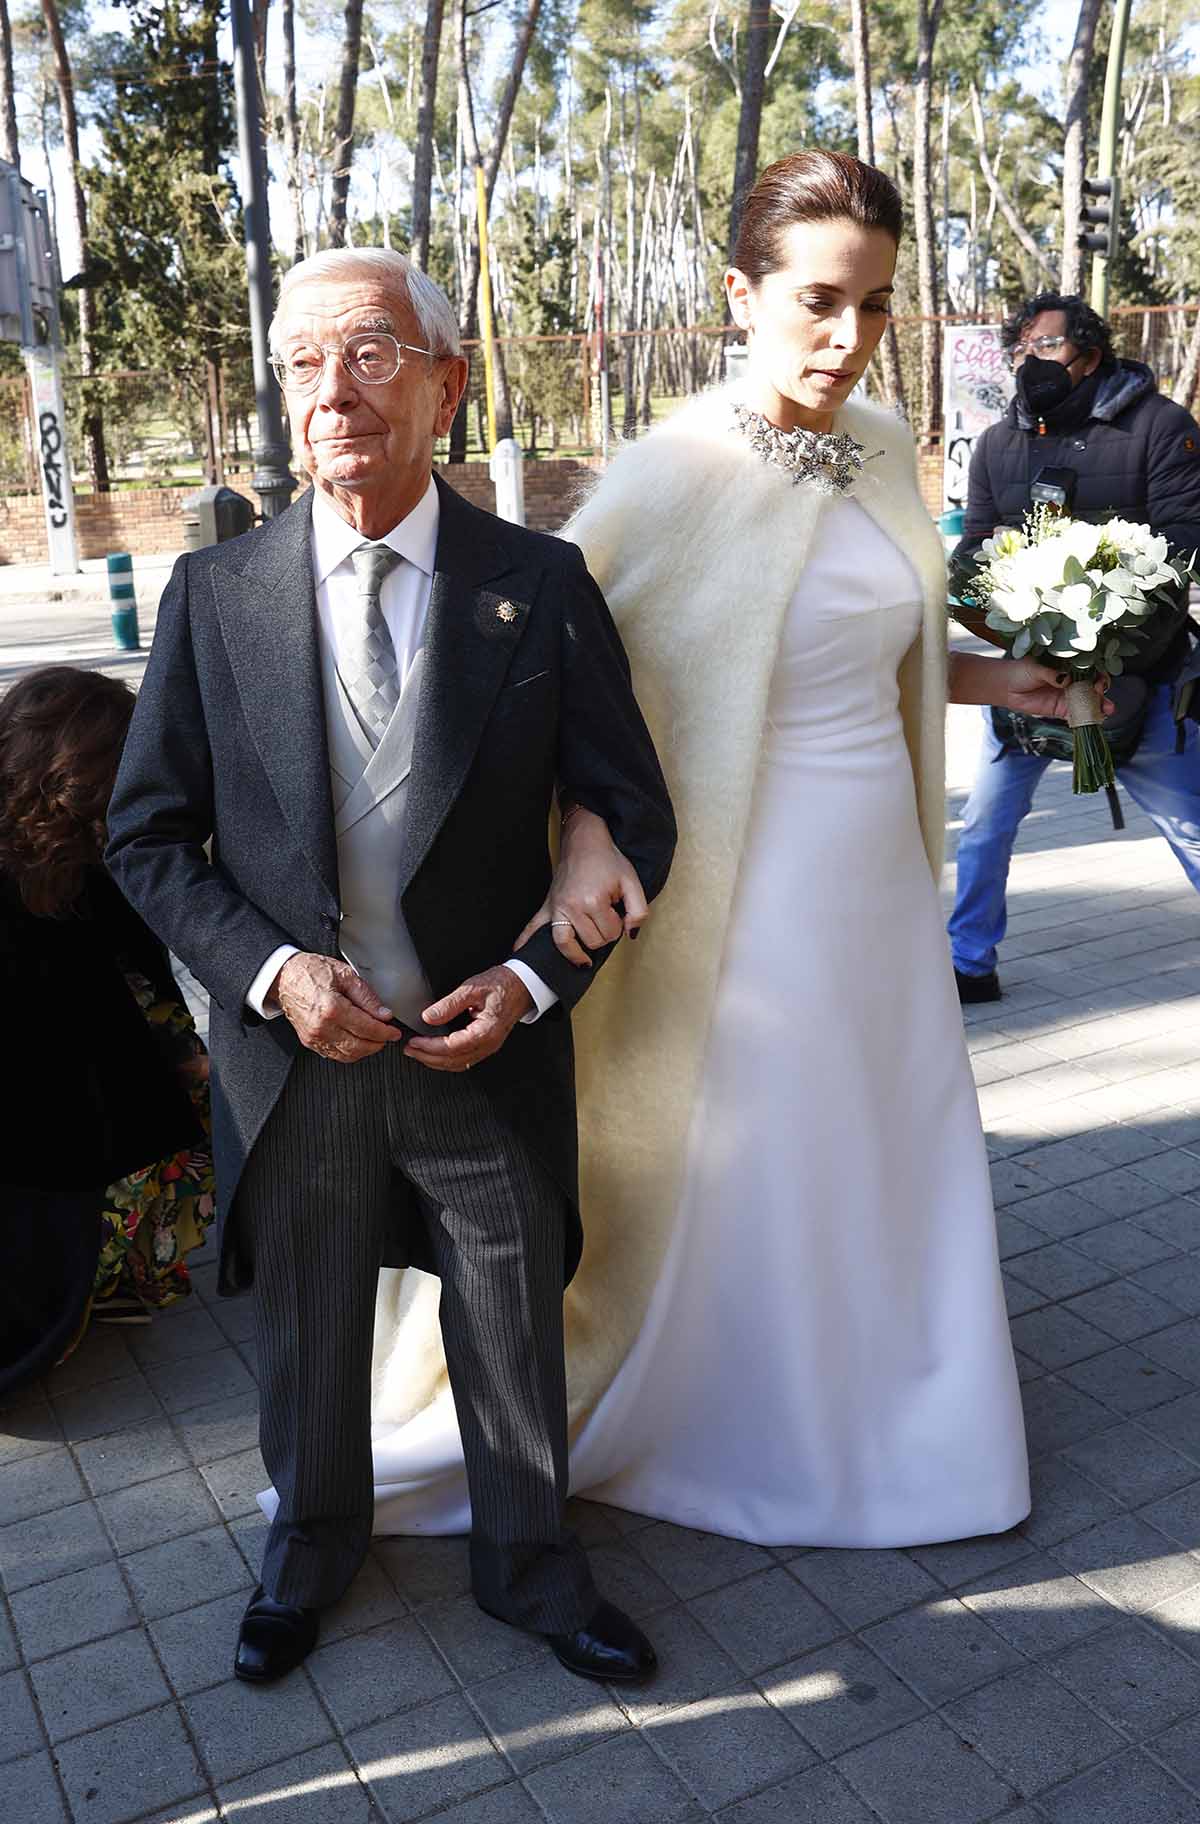 during the wedding of Alejandra Anson and Ignacio Sampedro in Madrid on Saturday, 22 January 2022.